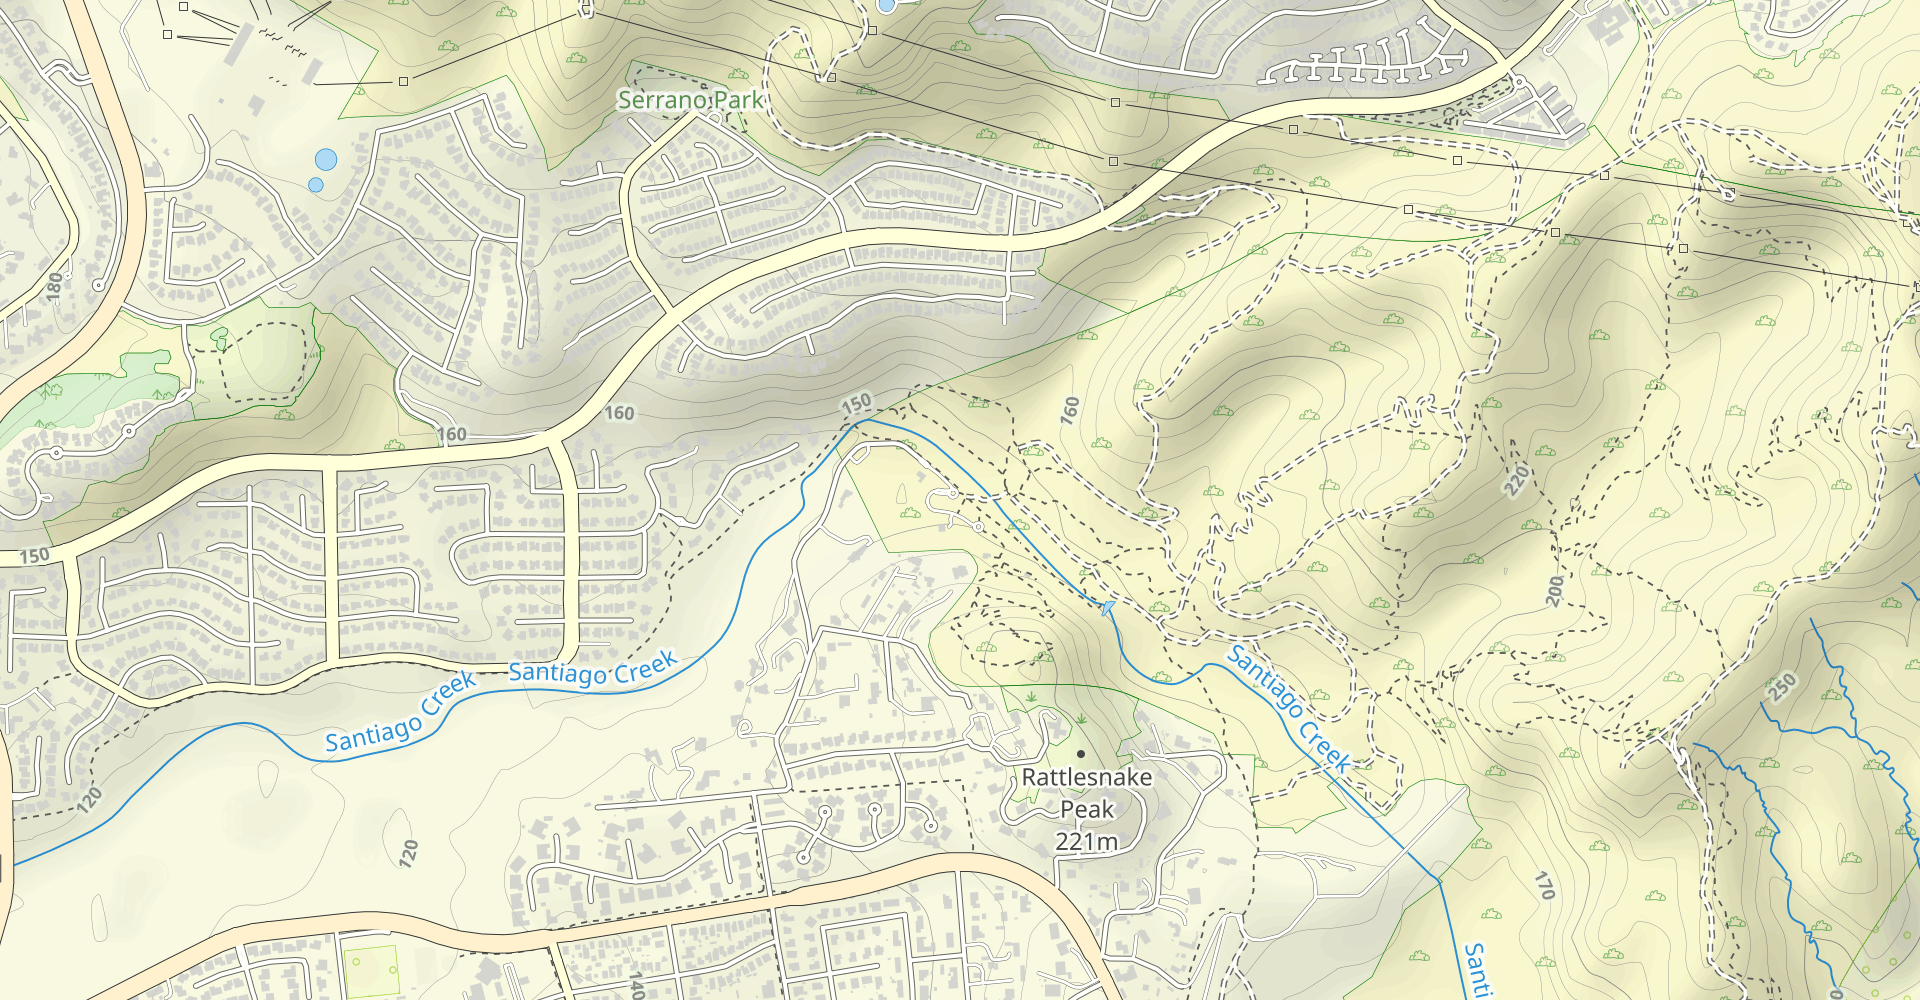 Santiago Oaks Trail and Peralta Hills Trail